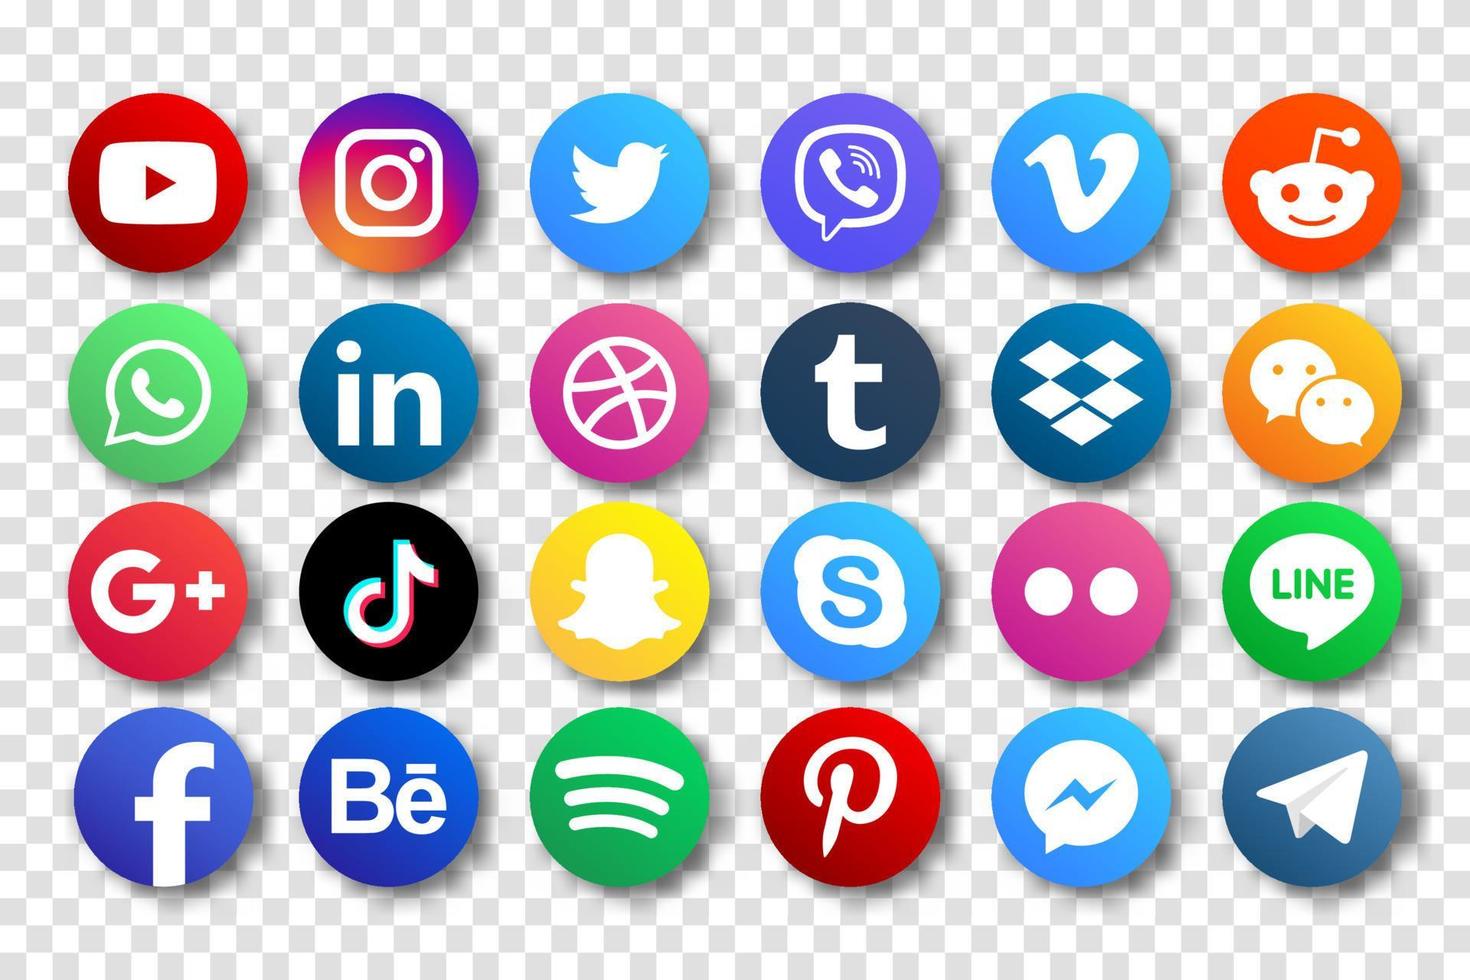 imposta le icone dei social media popolari. facebook, instagram, twitter, youtube, pinterest, behance, google plus, linkedin, whatsapp, snapchat, tiktok, tumblr, spotify, dropbox e molti altri vettore